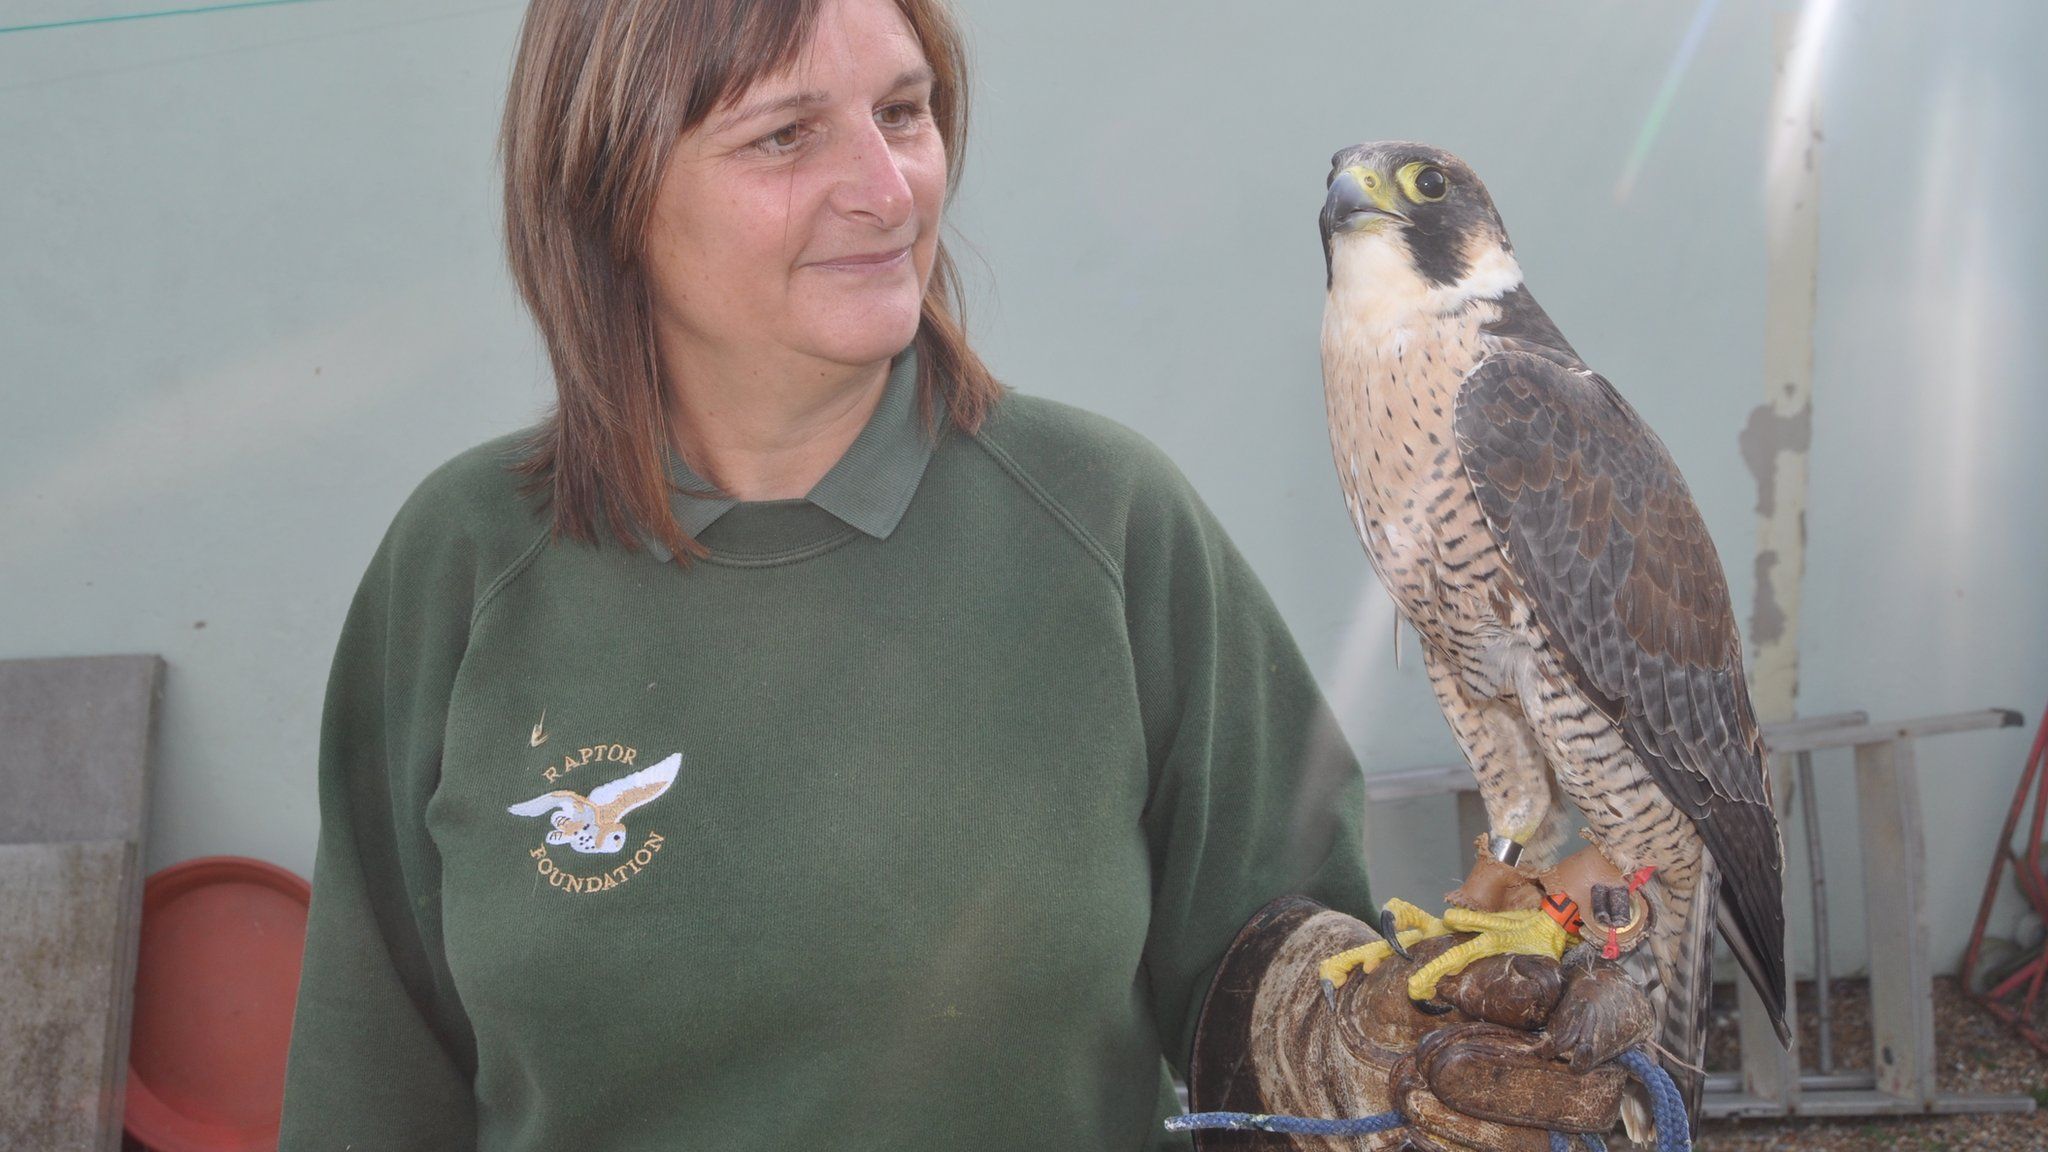 Liz Blows and a peregrine falcon